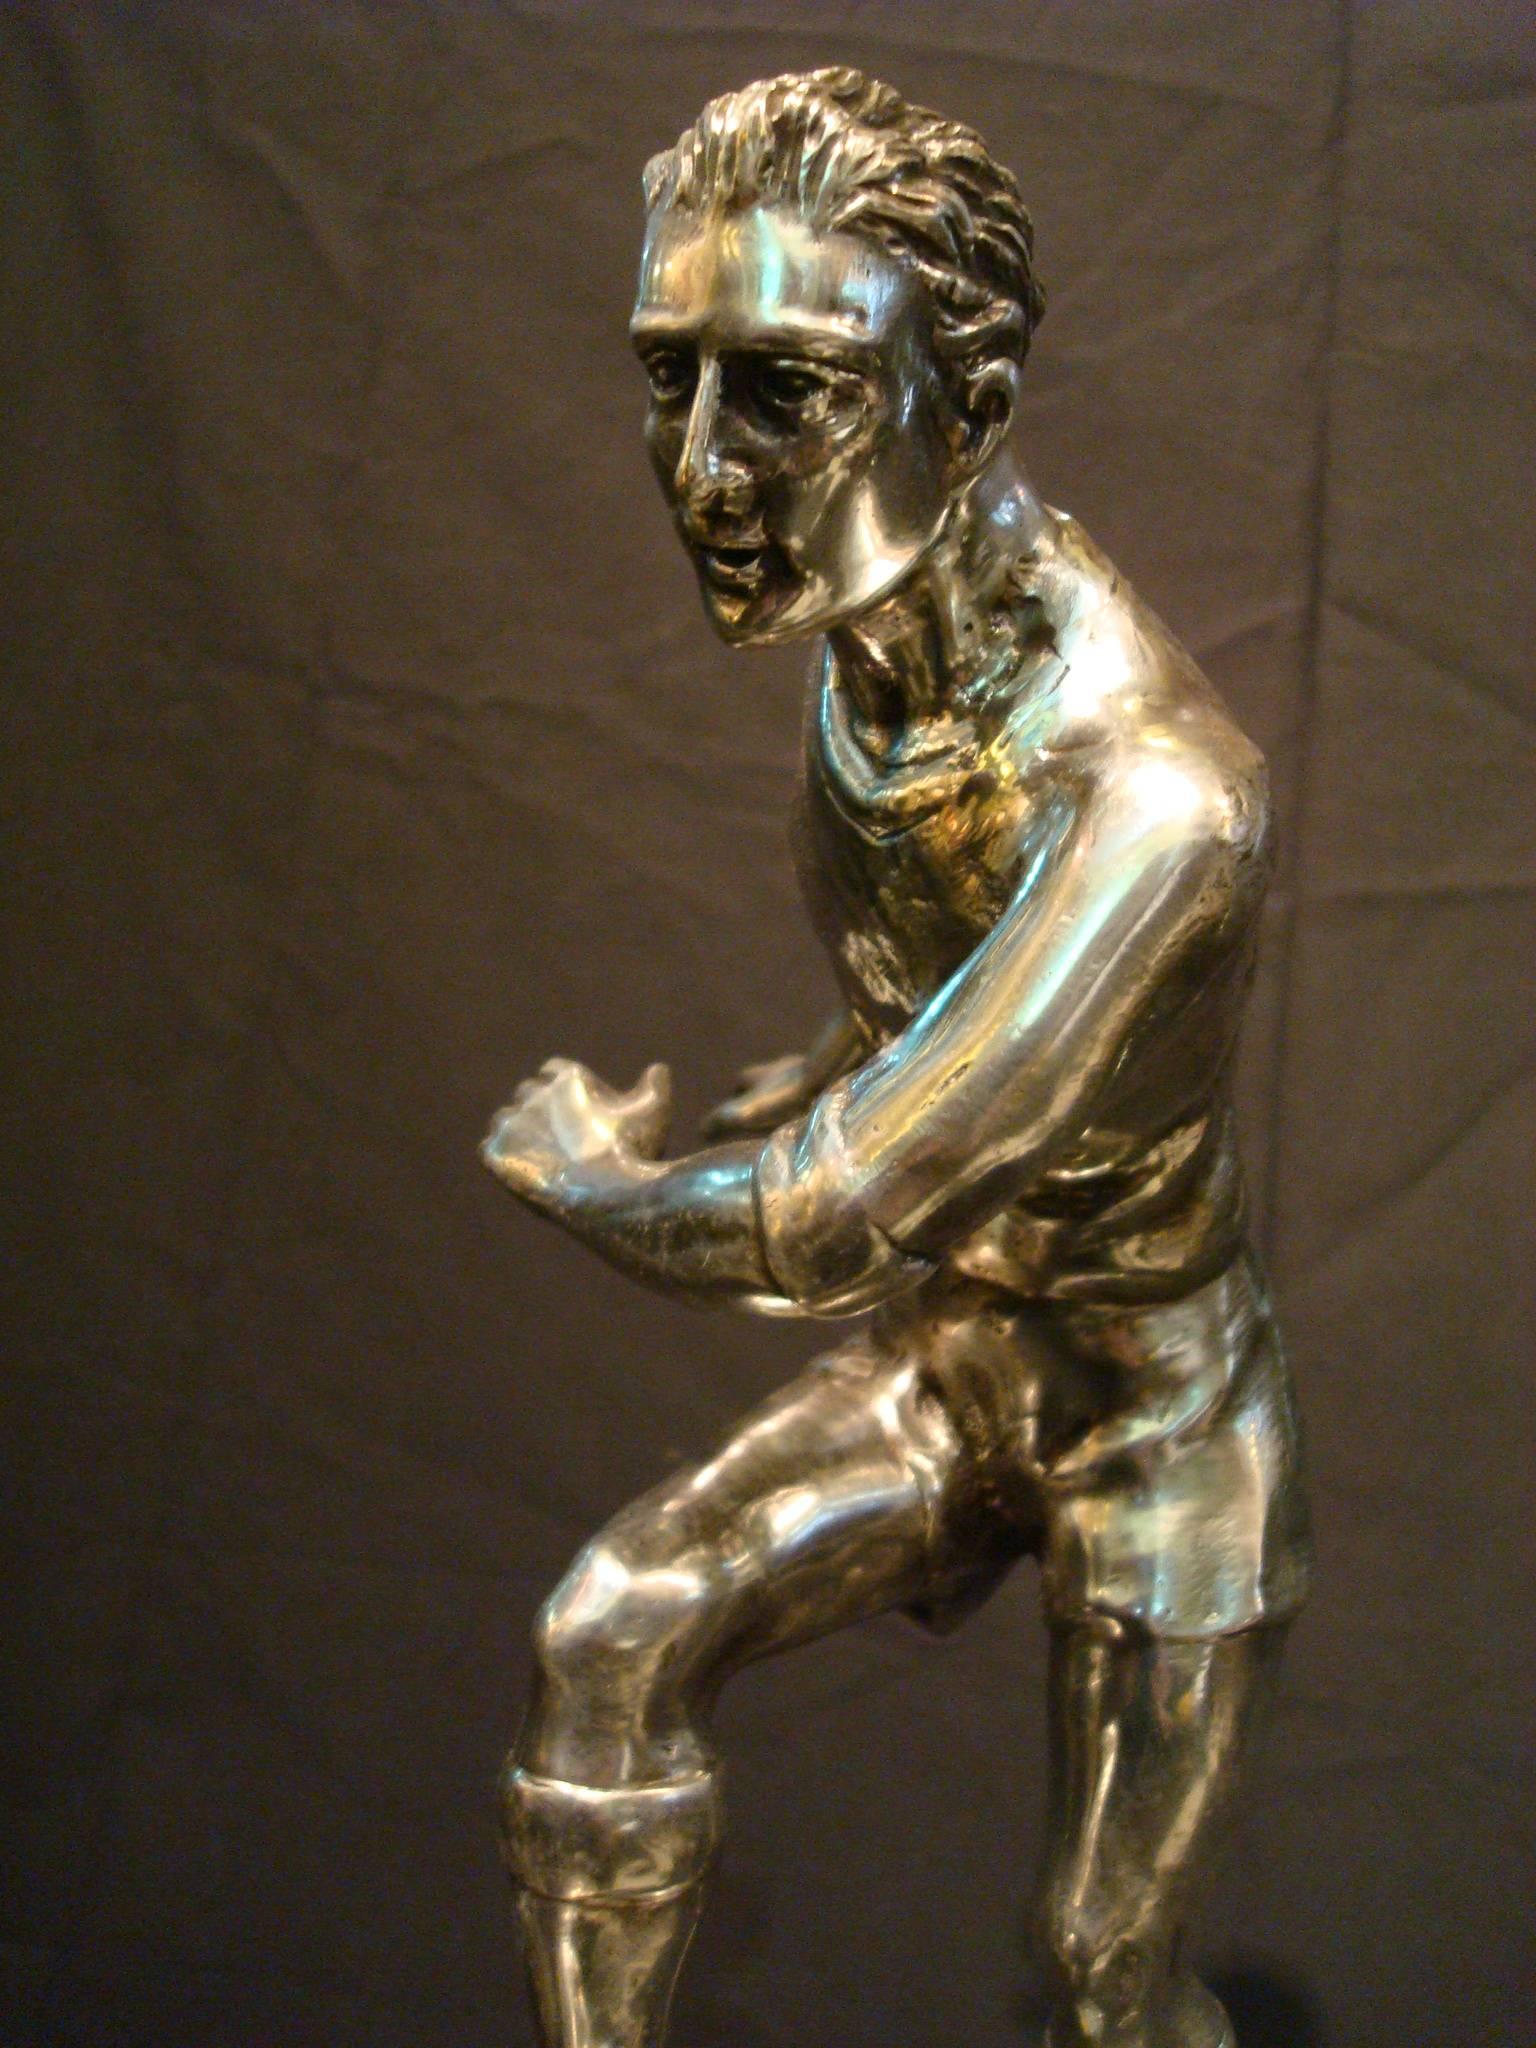 soccer player bronze statue